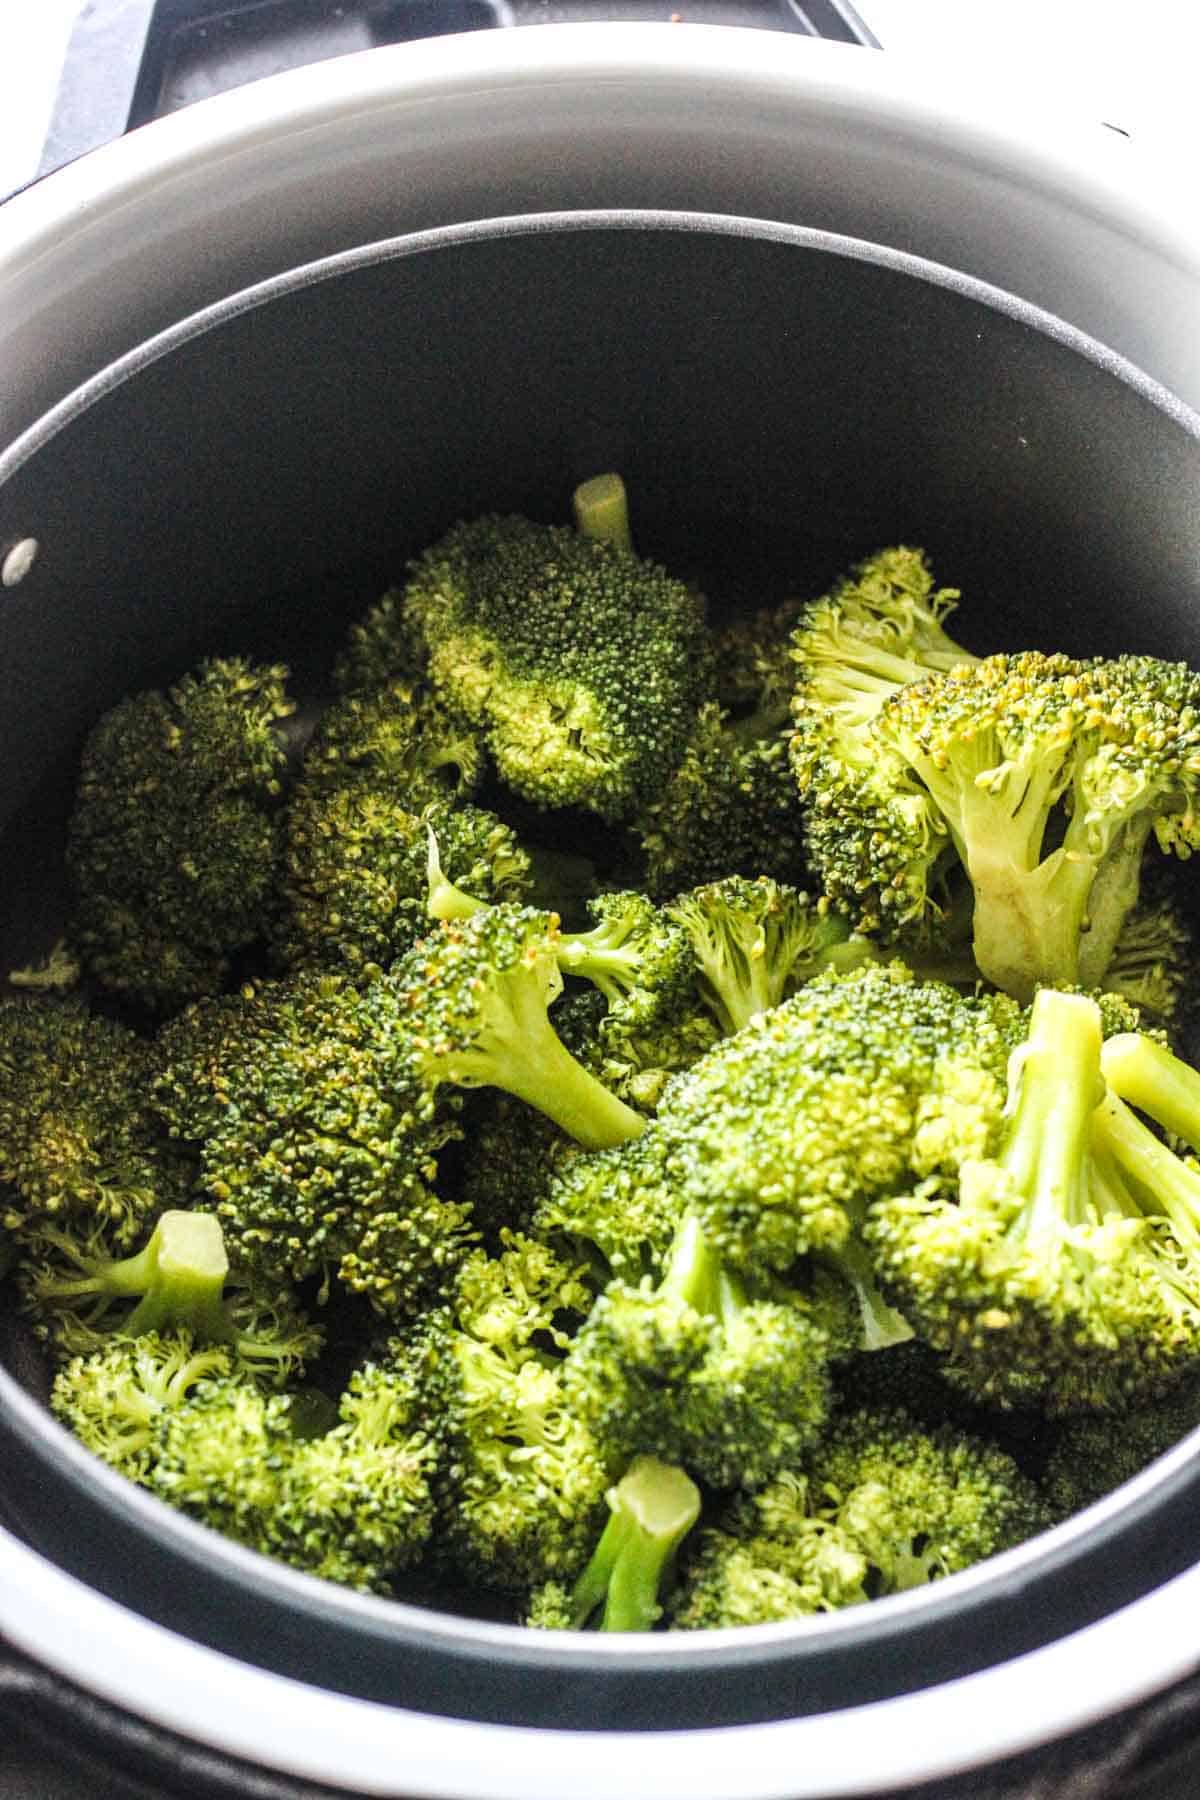 Ninja foodi steamed broccoli (from fresh or frozen)